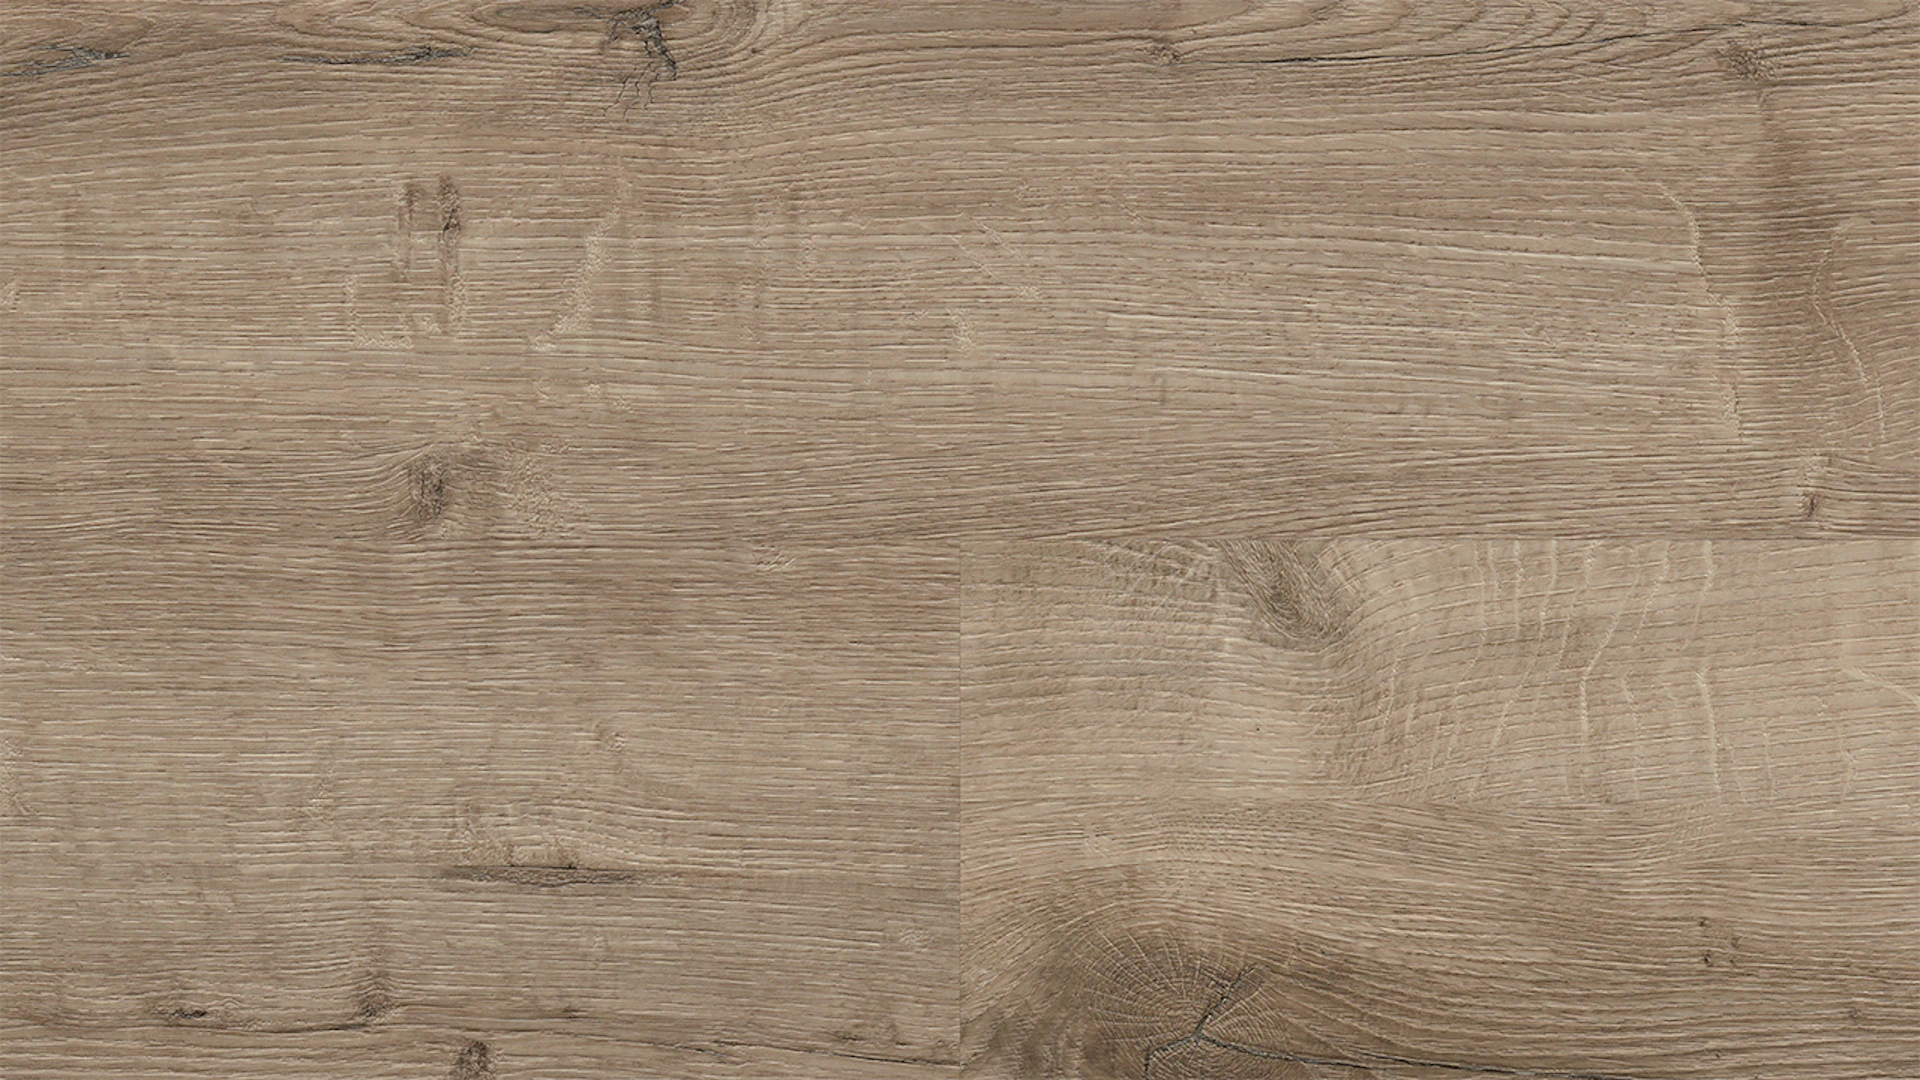 Wineo Klebevinyl - 400 wood XL Comfort Oak Taupe | Synchronprägung (DB300WXL)